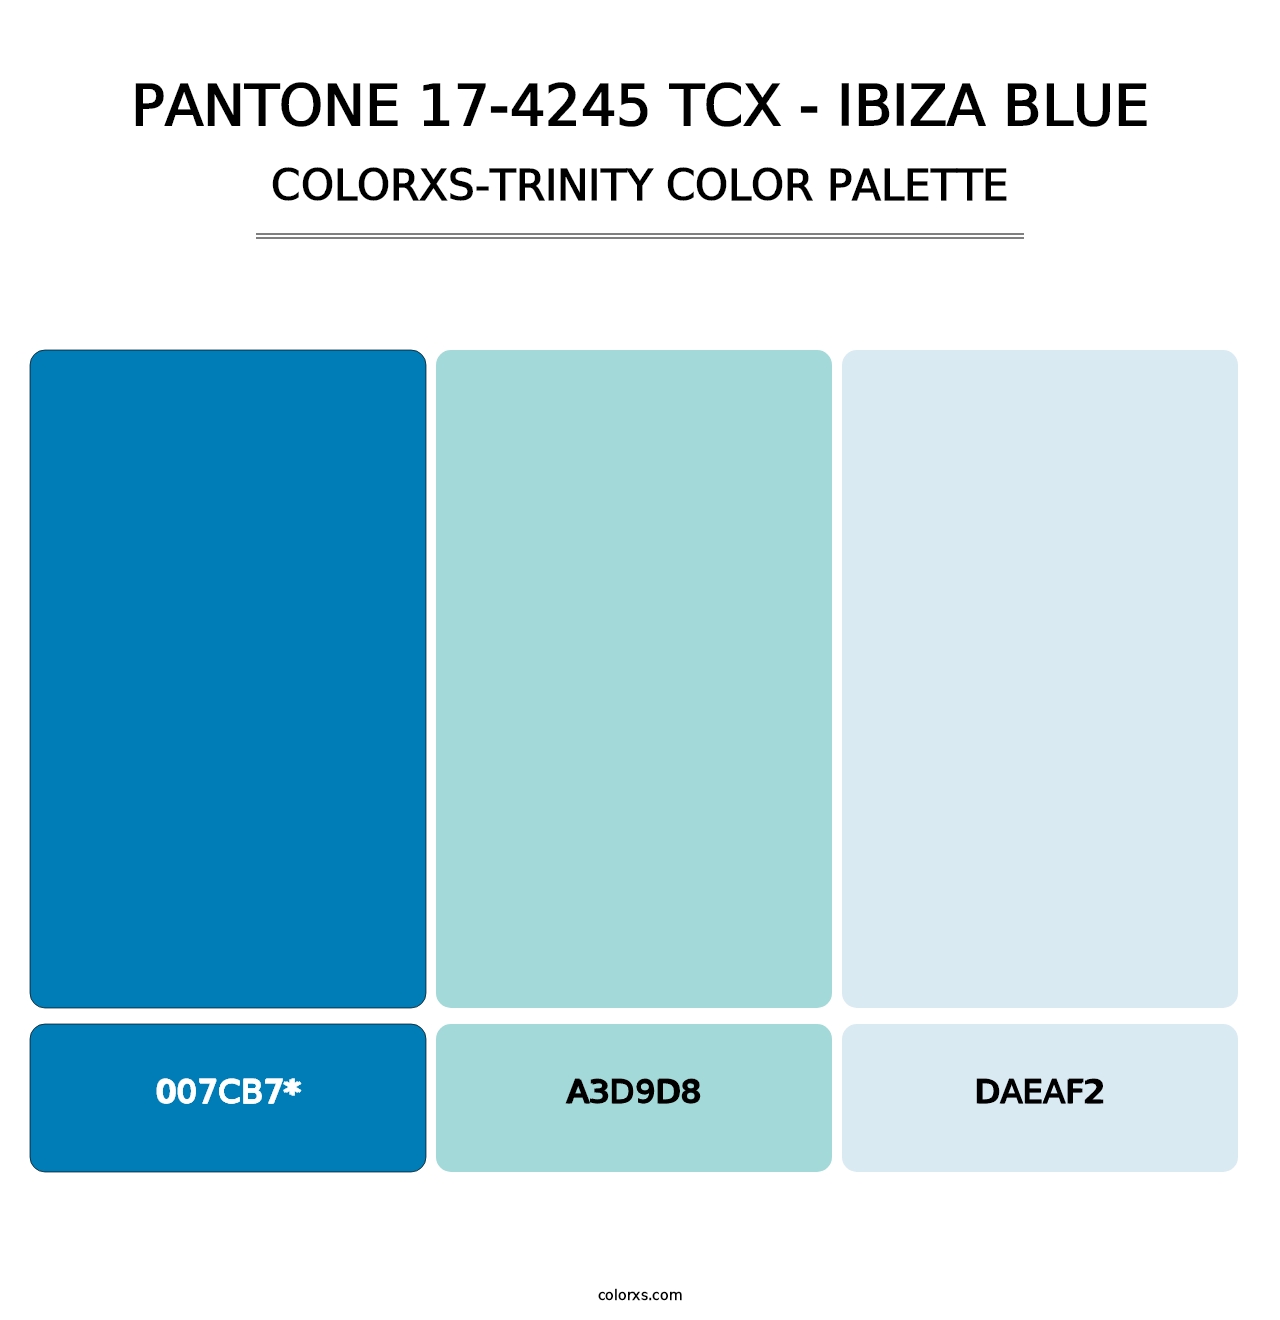 PANTONE 17-4245 TCX - Ibiza Blue - Colorxs Trinity Palette